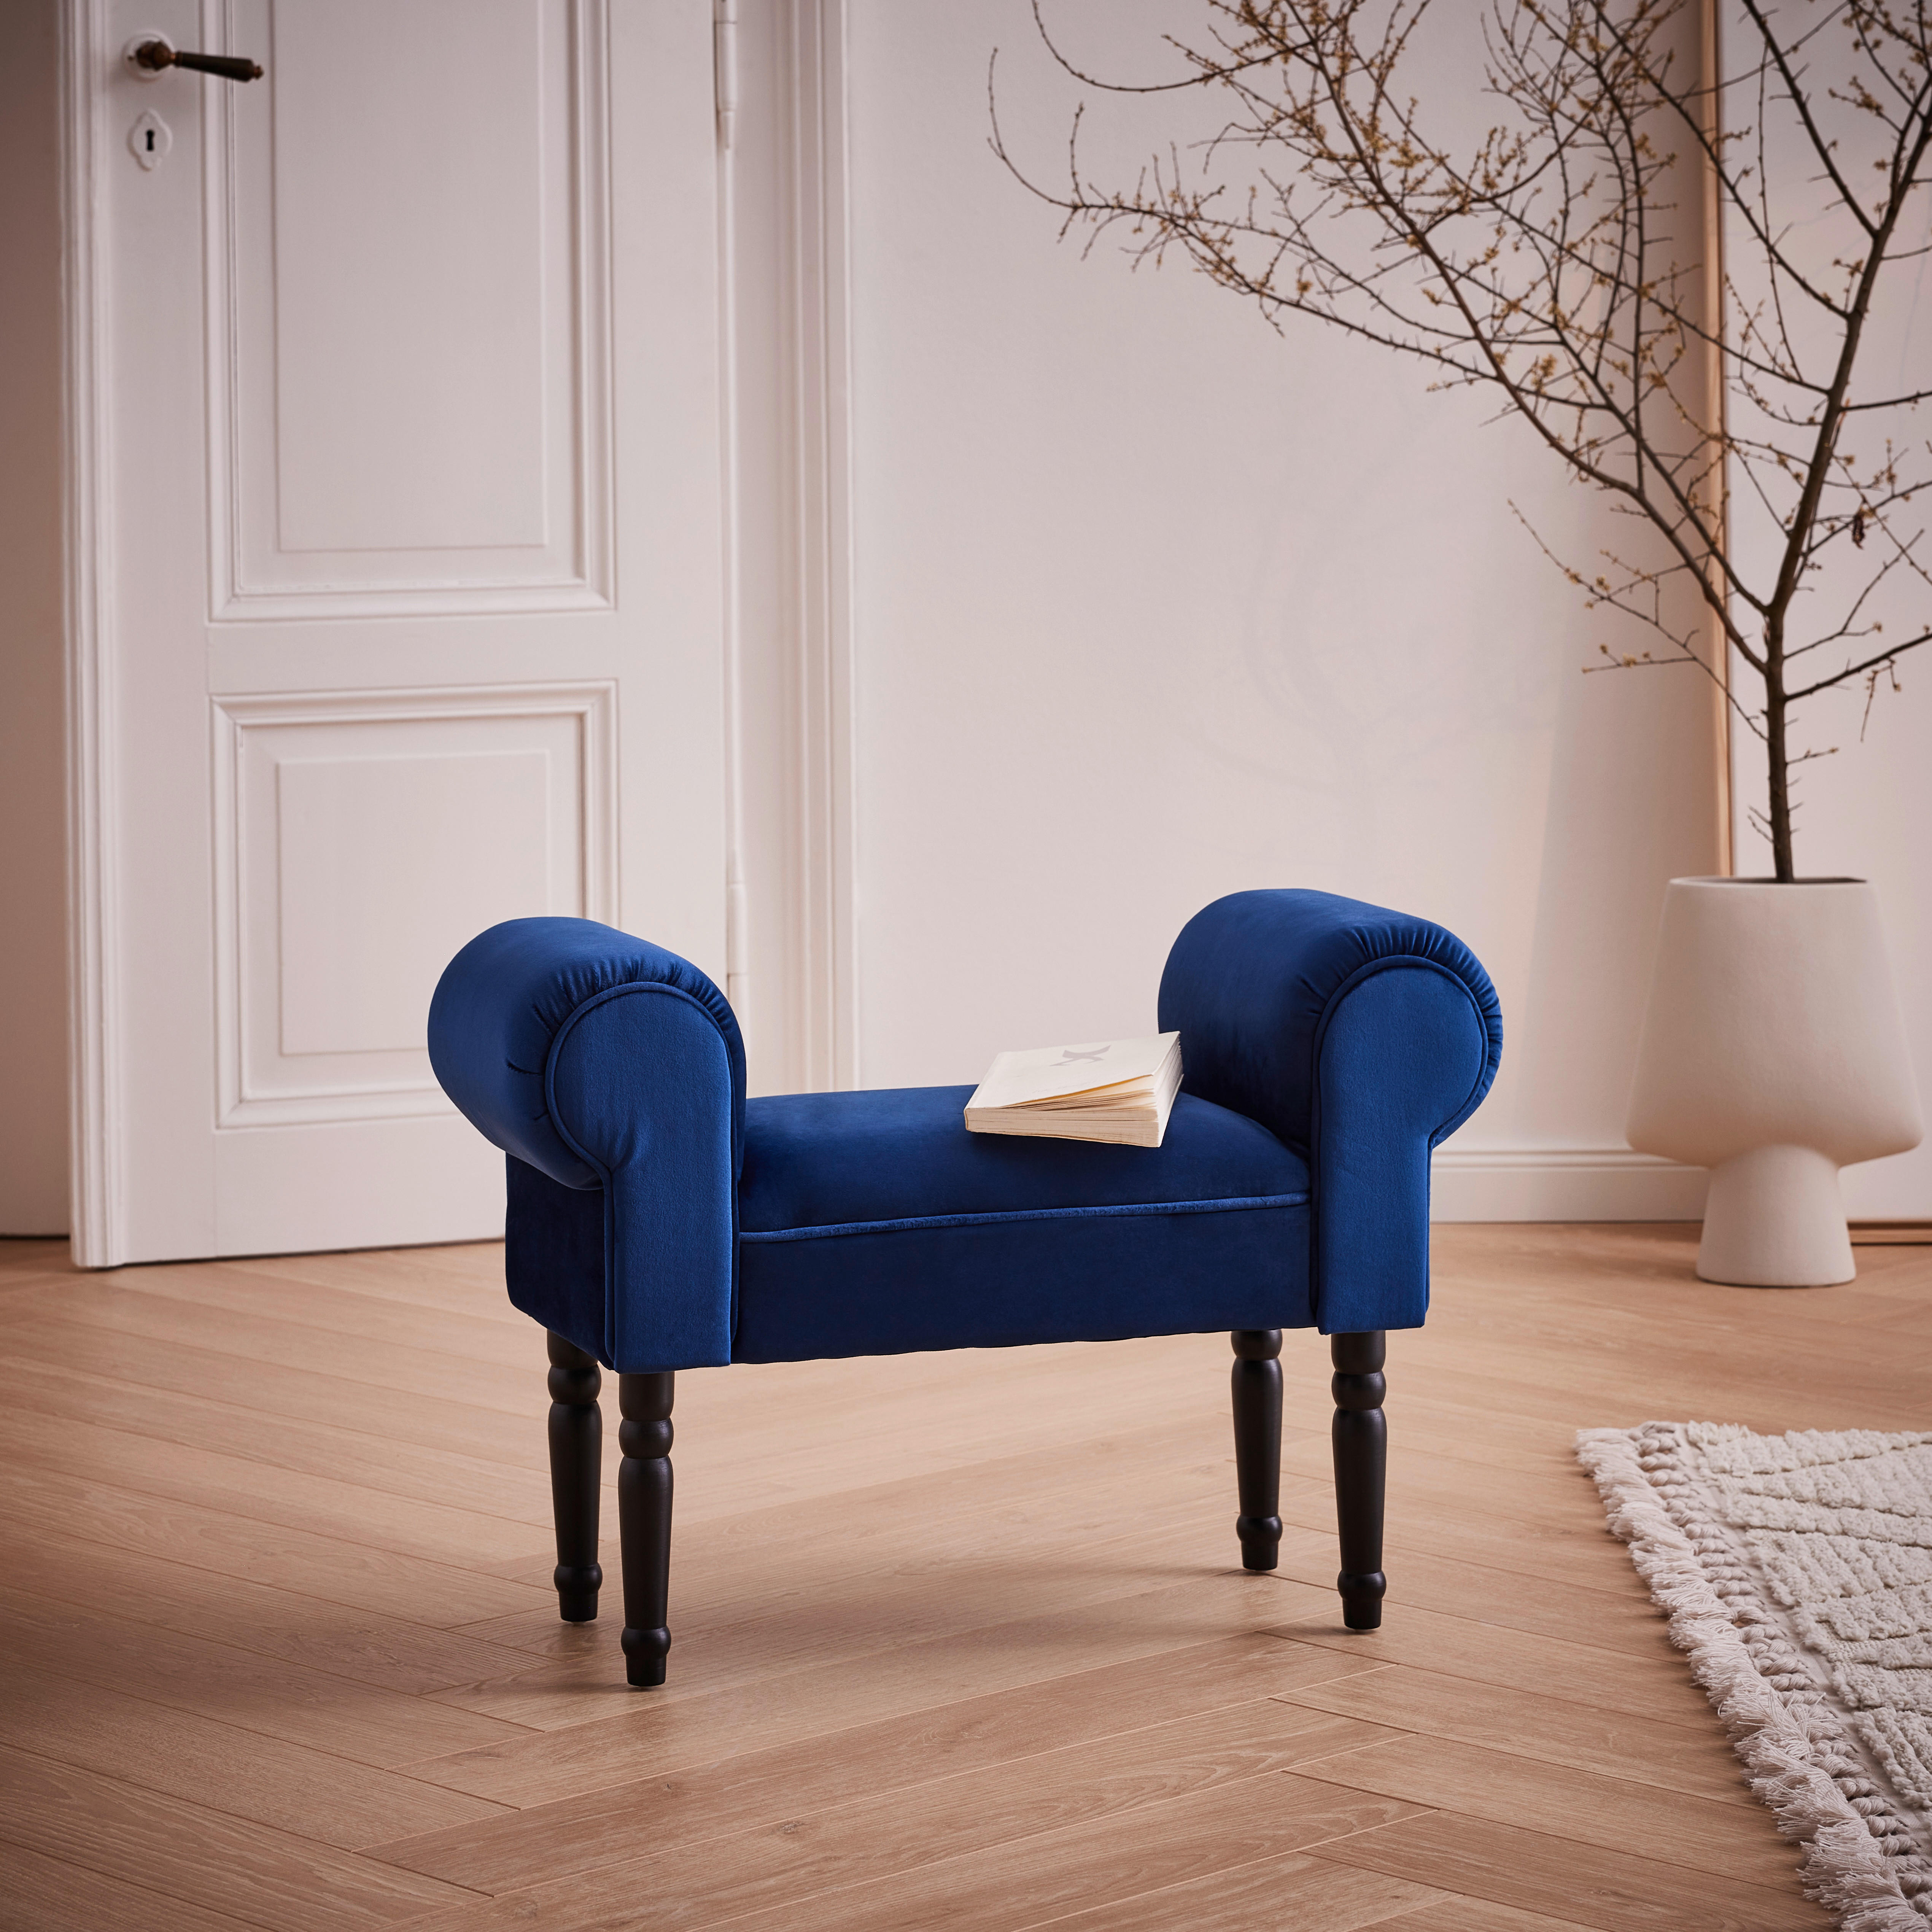 TABURET in lemn, textil albastru, negru  - albastru/negru, Trend, lemn/textil (76/54/30cm) - Xora